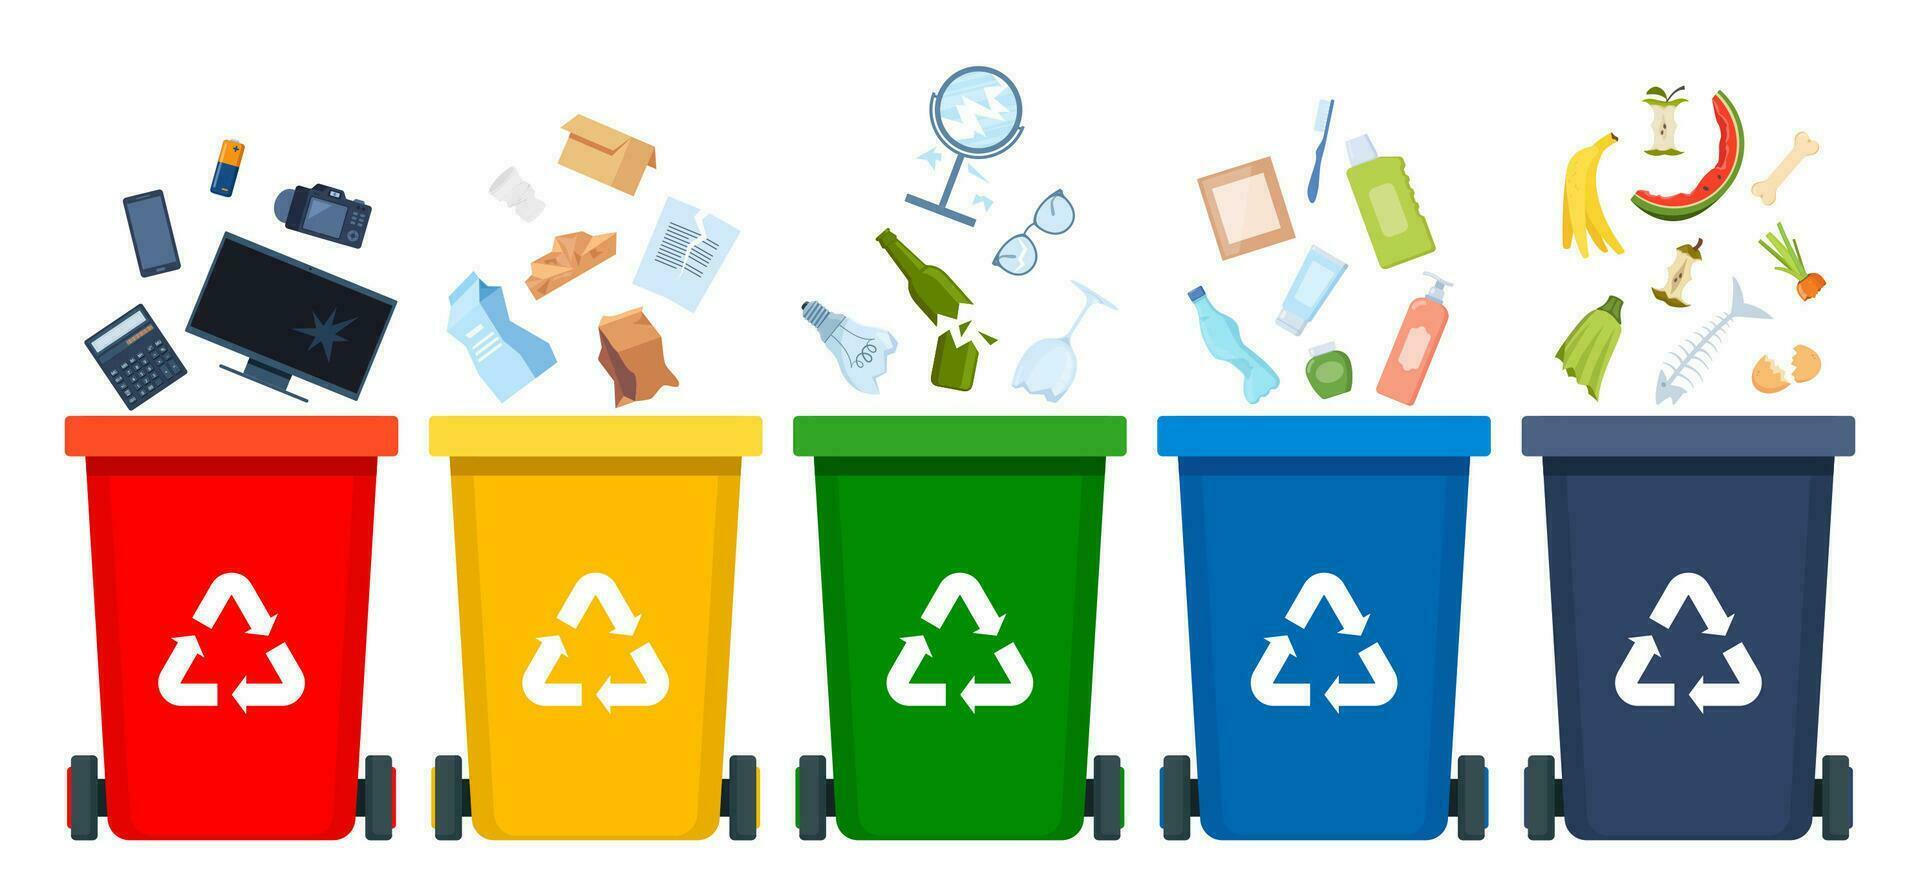 Müll Sortierung Satz. Behälter mit Recycling Symbole zum Elektroschrott, Plastik, Metall, Glas, Papier, organisch Müll. Vektor Illustration zum Null Abfall, Umgebung Schutz Konzept.